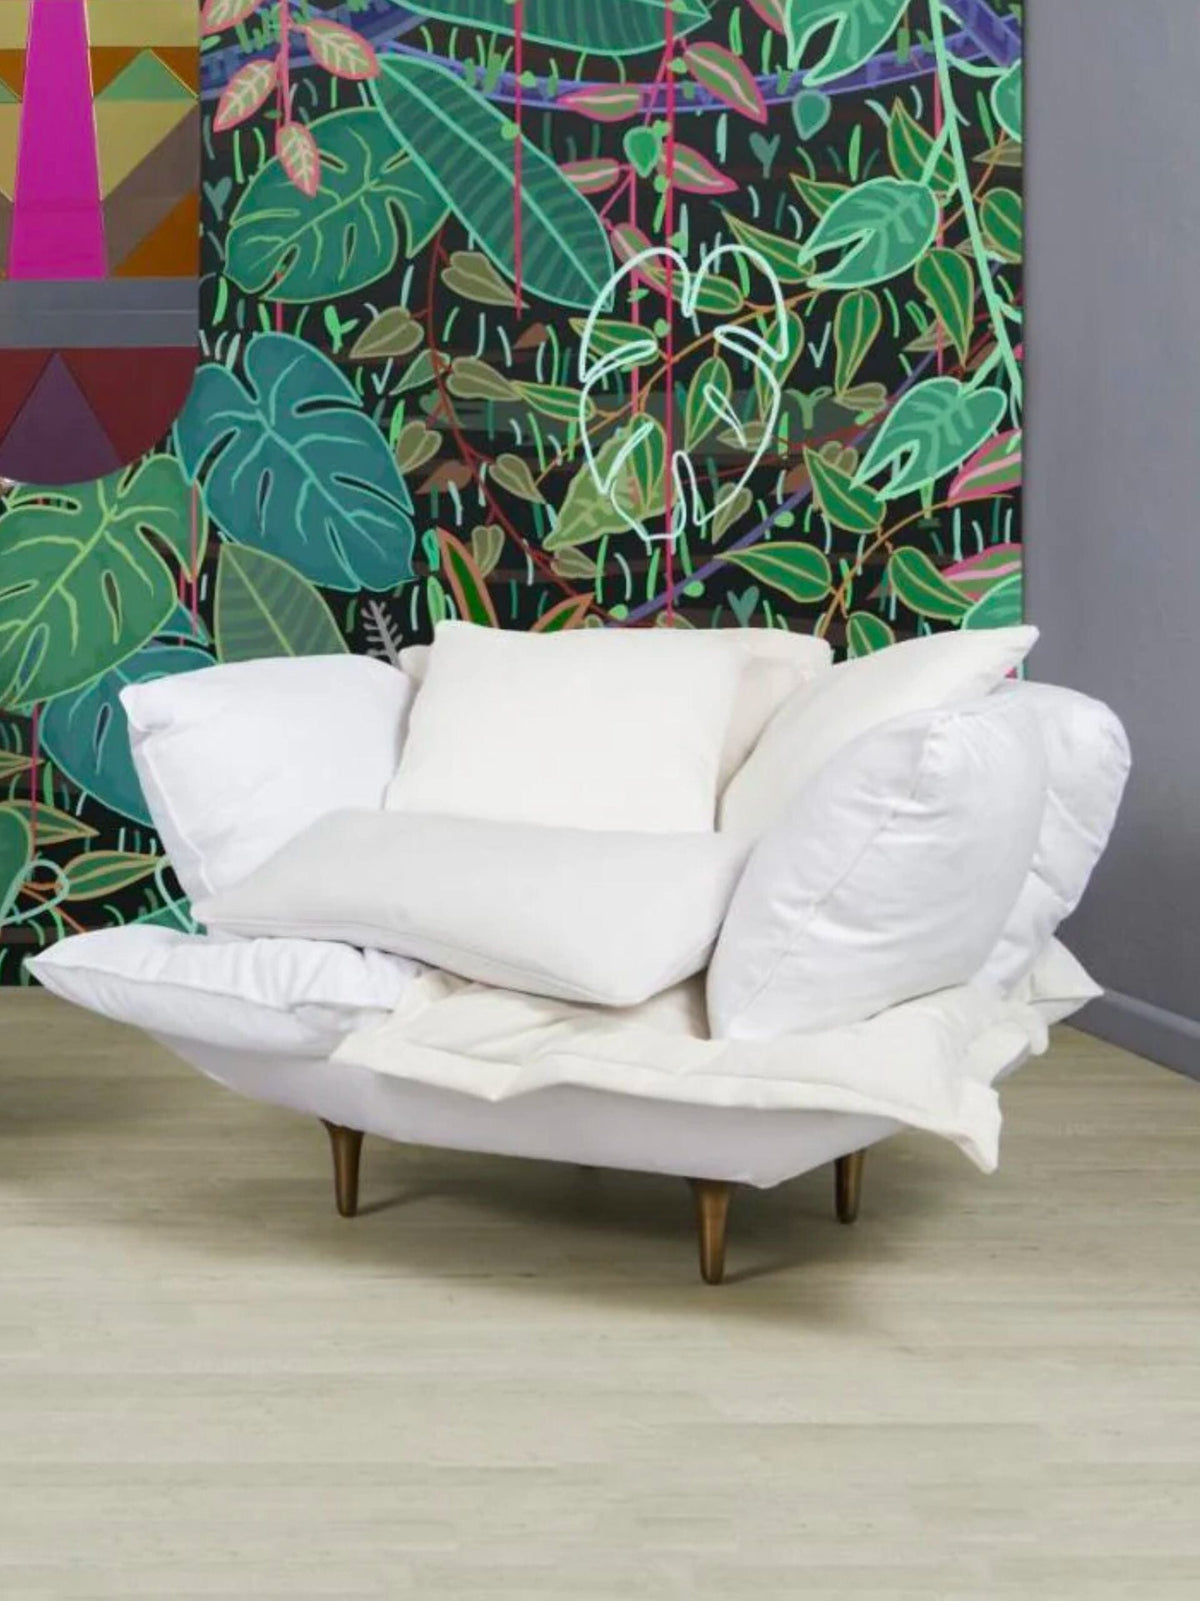 Comfy Sofa / White Seletti Seletti 